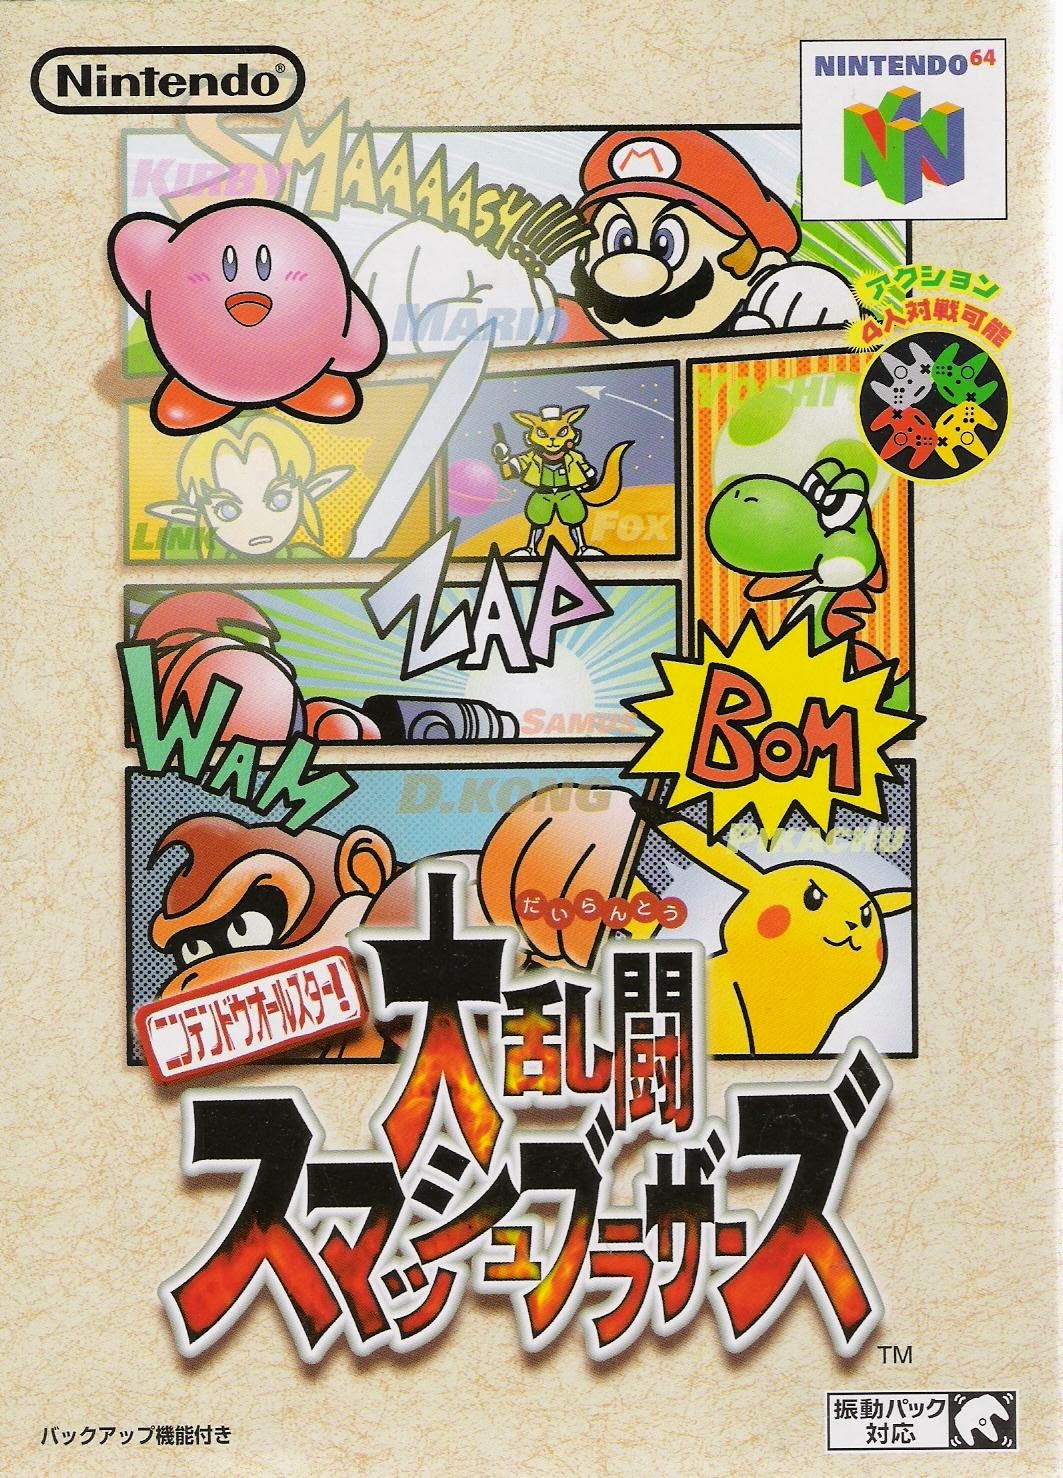 Super Smash Bros N64 japan cover art.jpg